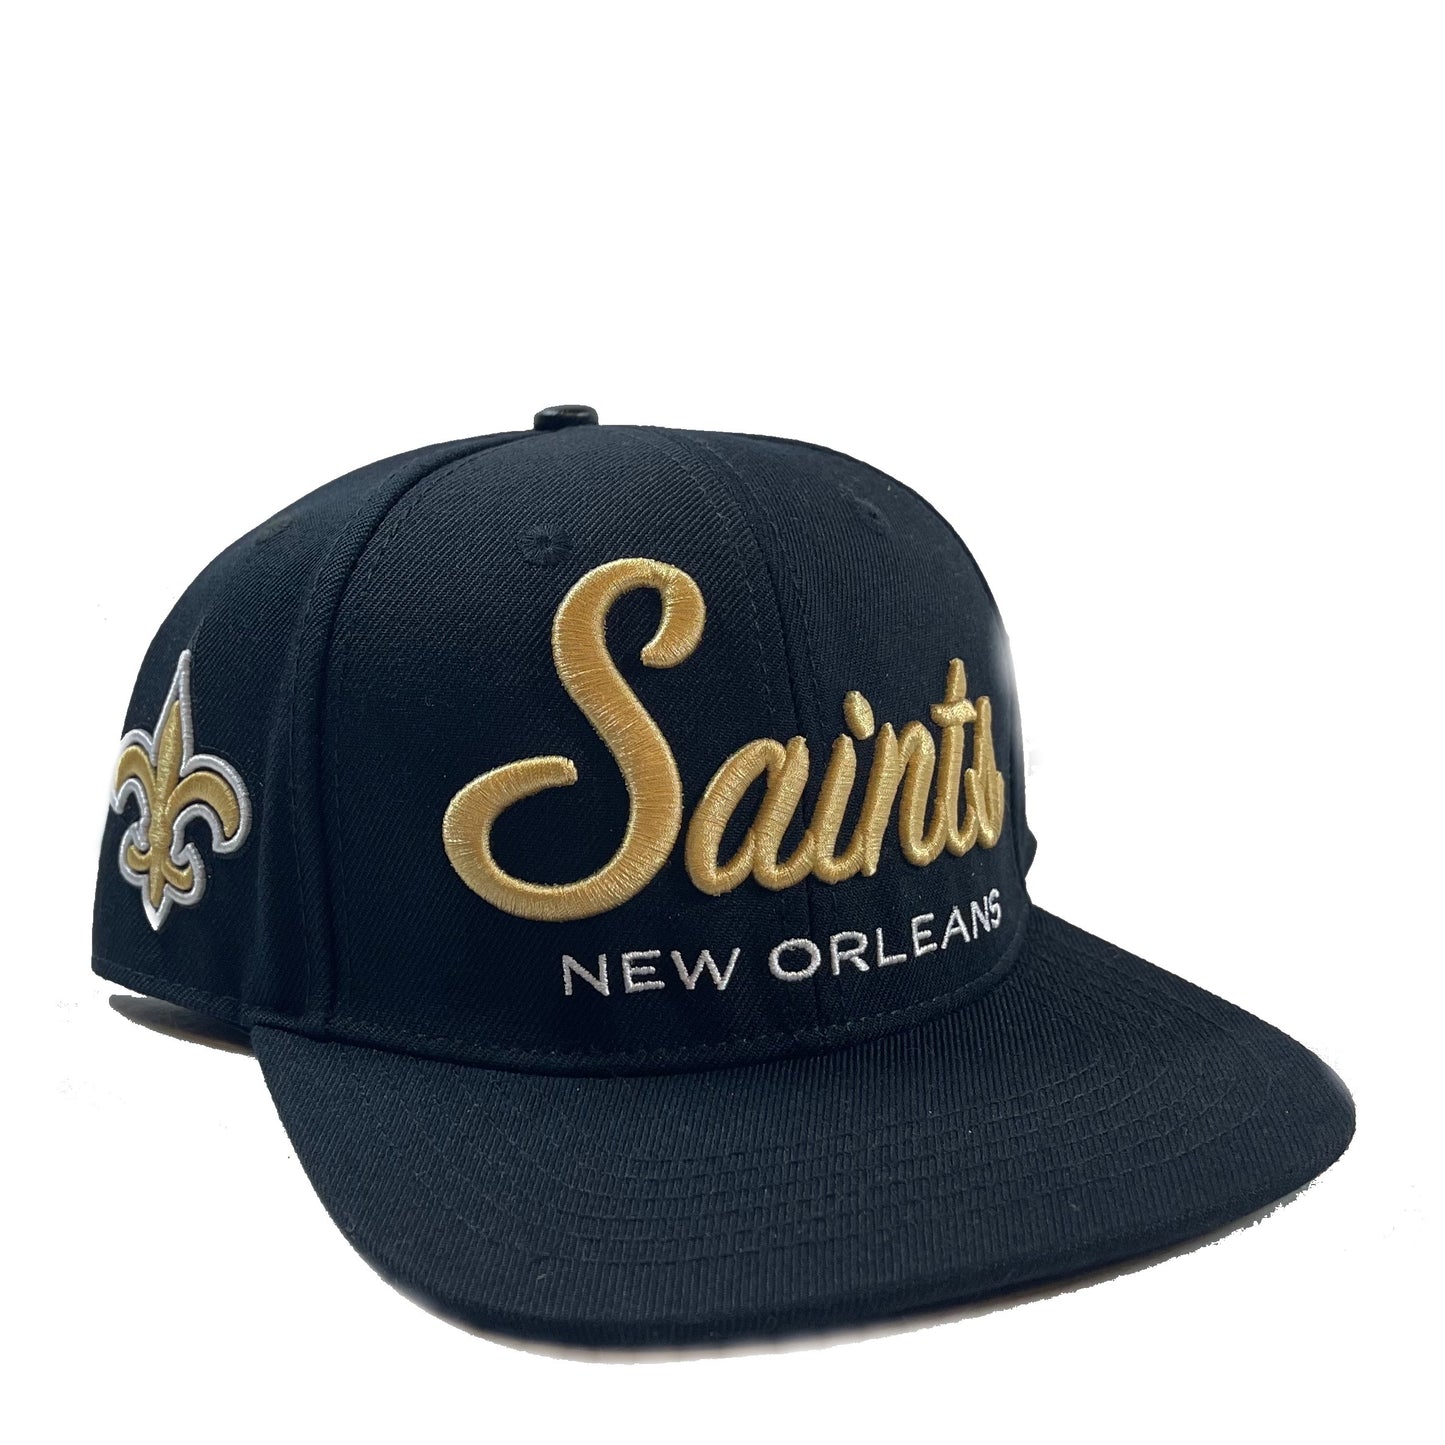 New Orleans Saints (Black) Snapback